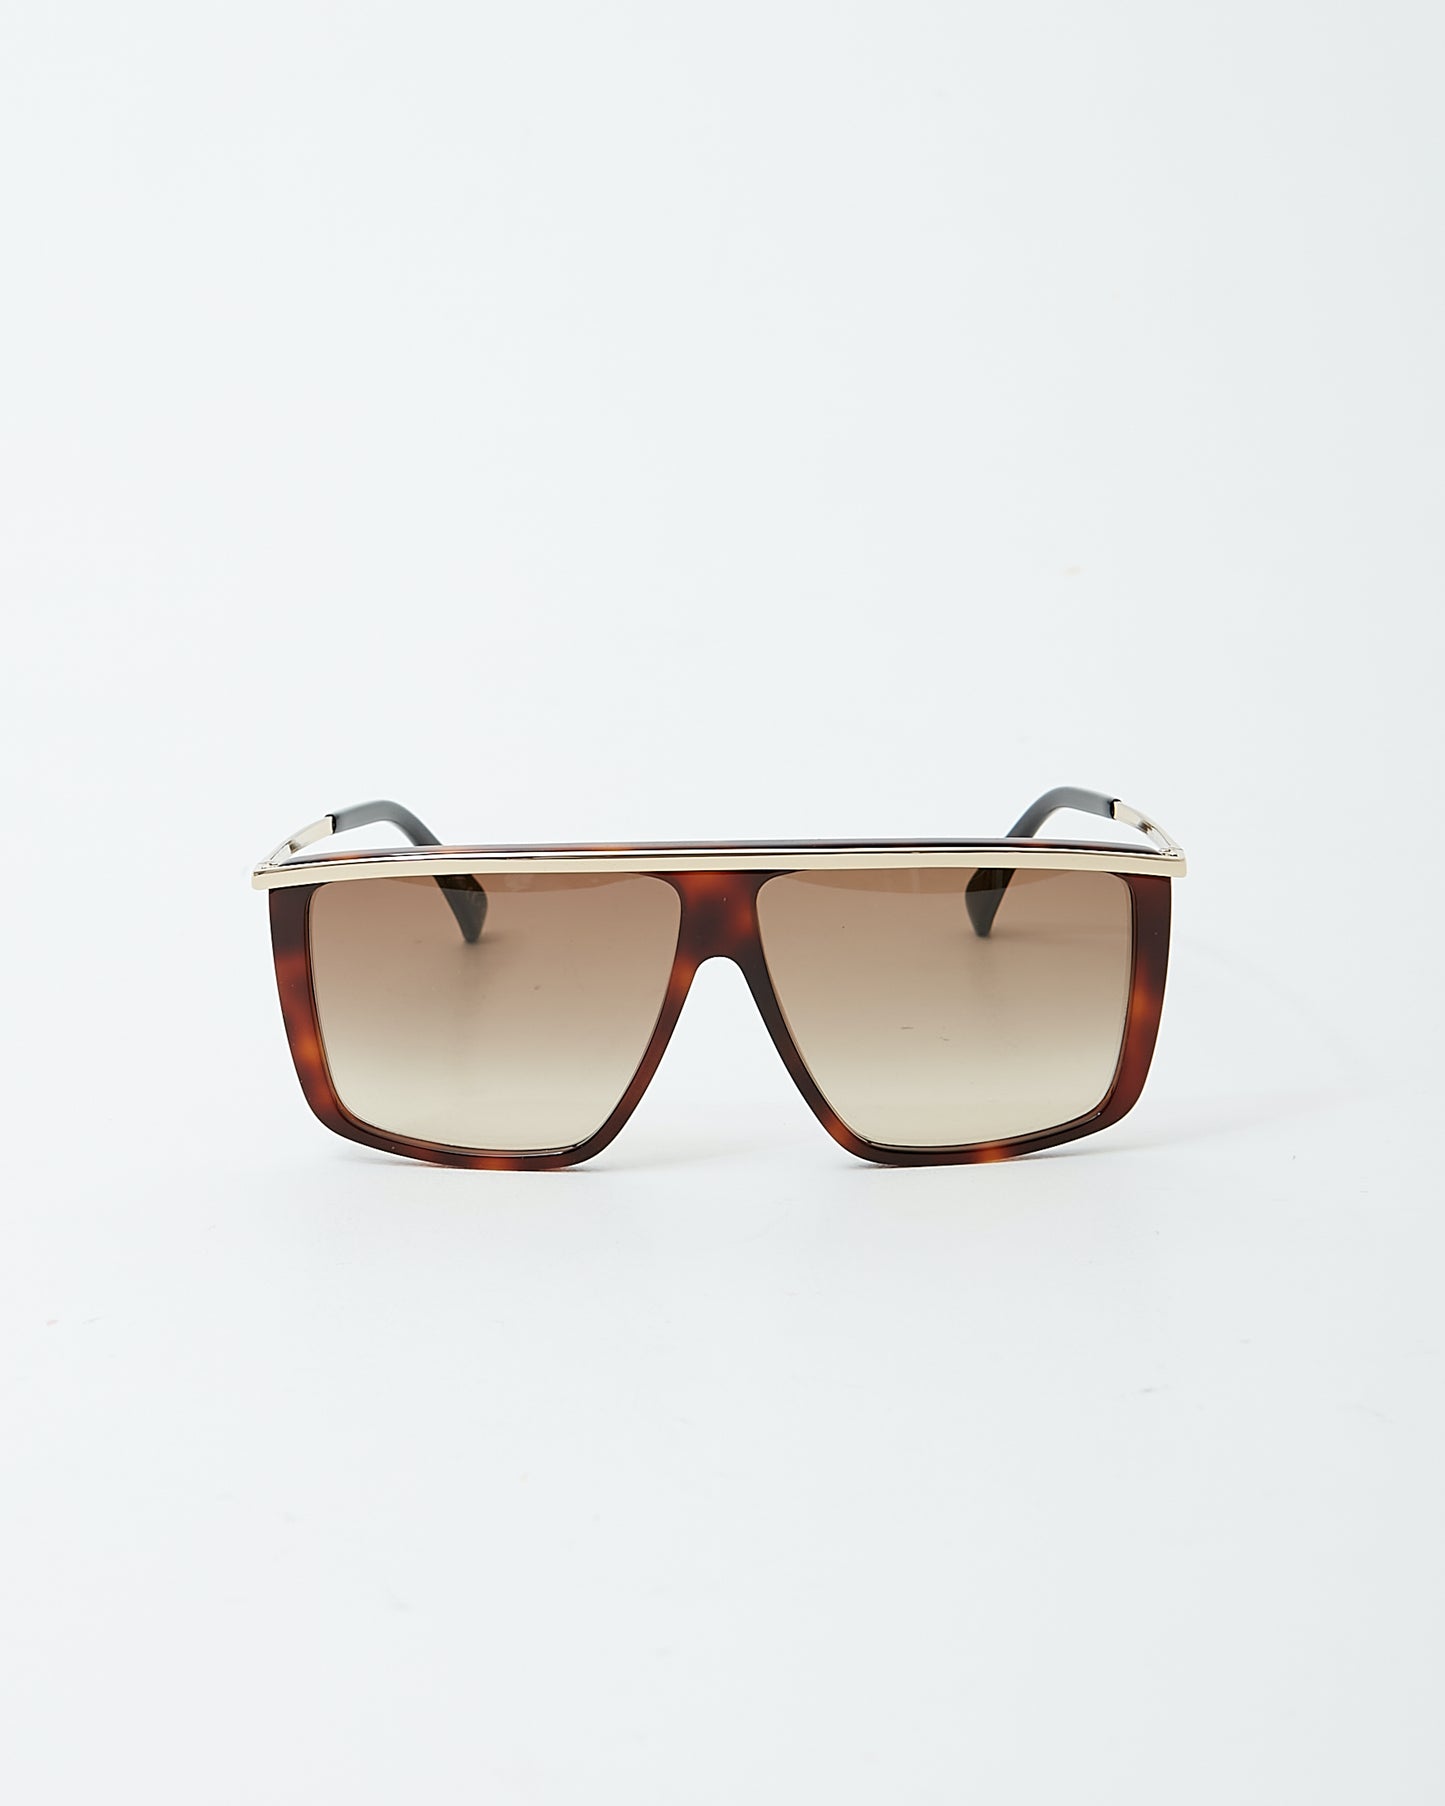 Givenchy Brown Tortoise GV7146/G/S Shield Aviator Sunglasses